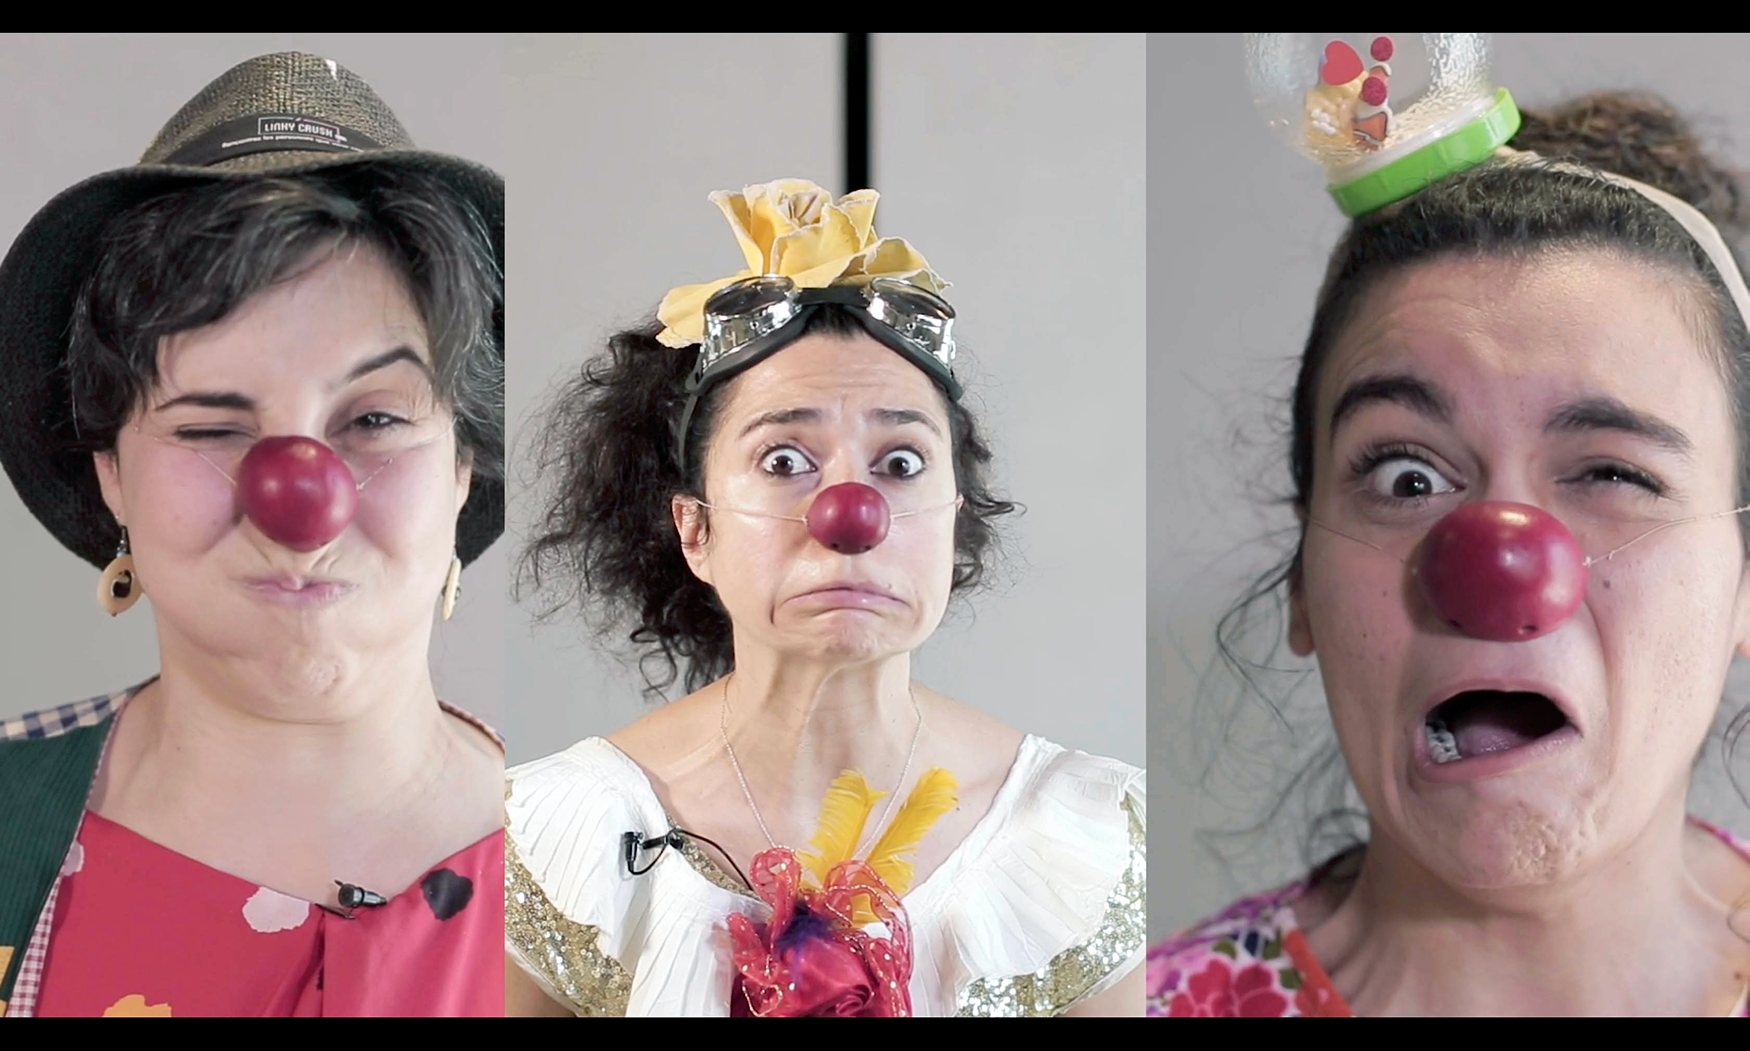 triptych of three clowns